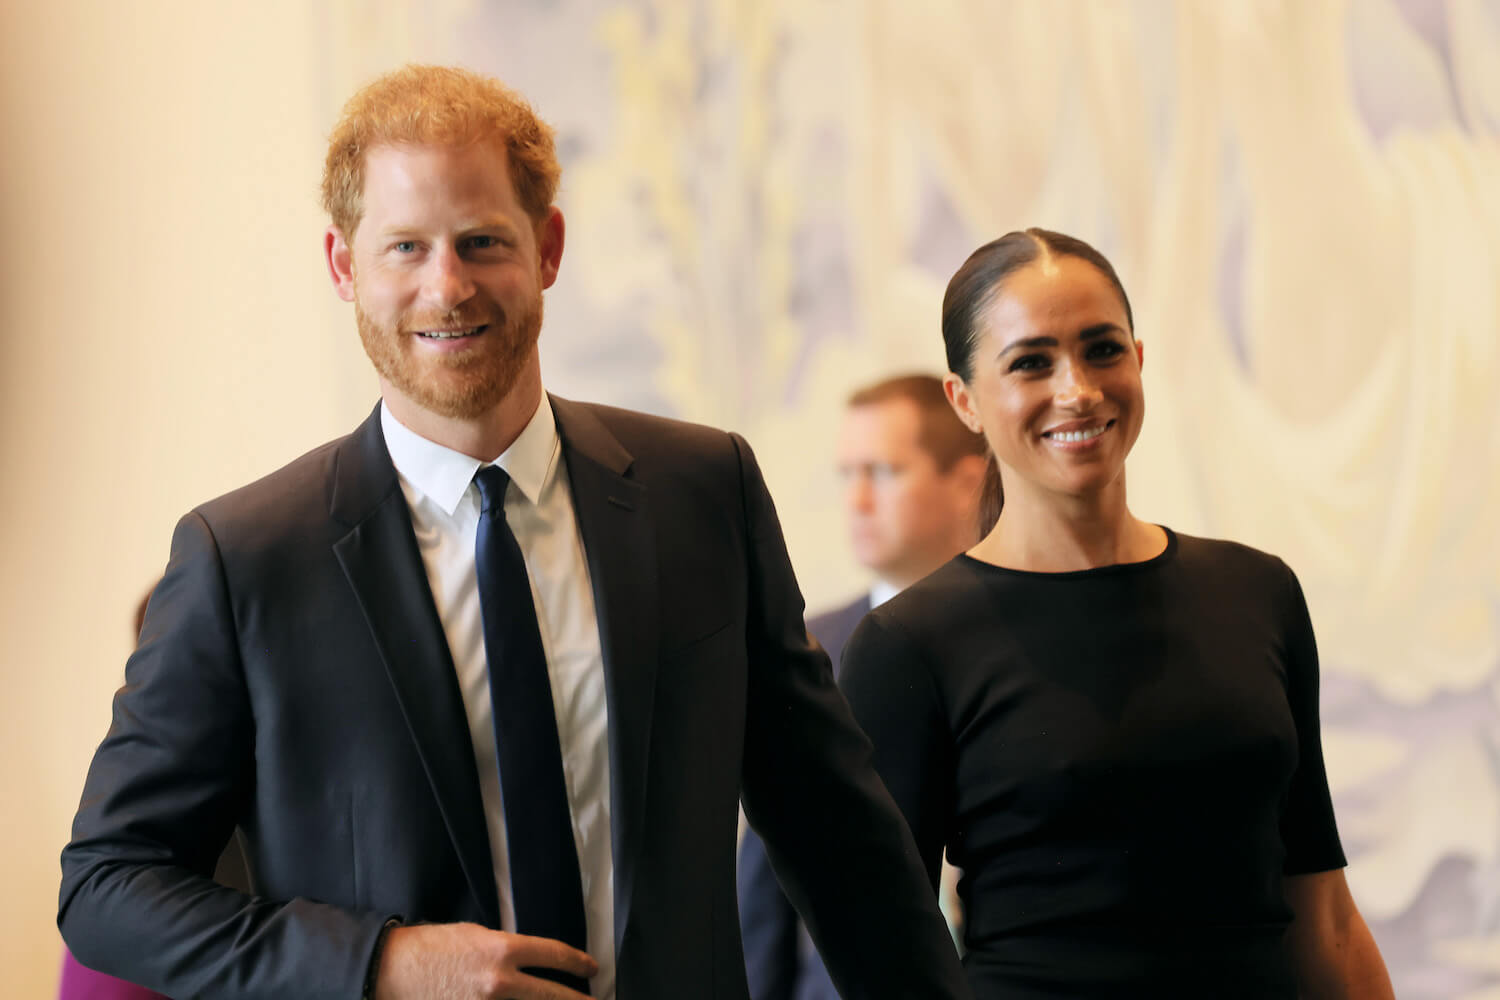 Meghan Markle Found 1 Aspect of Royal Life ‘Unbearable,’ Former Prince Harry Friend Claims